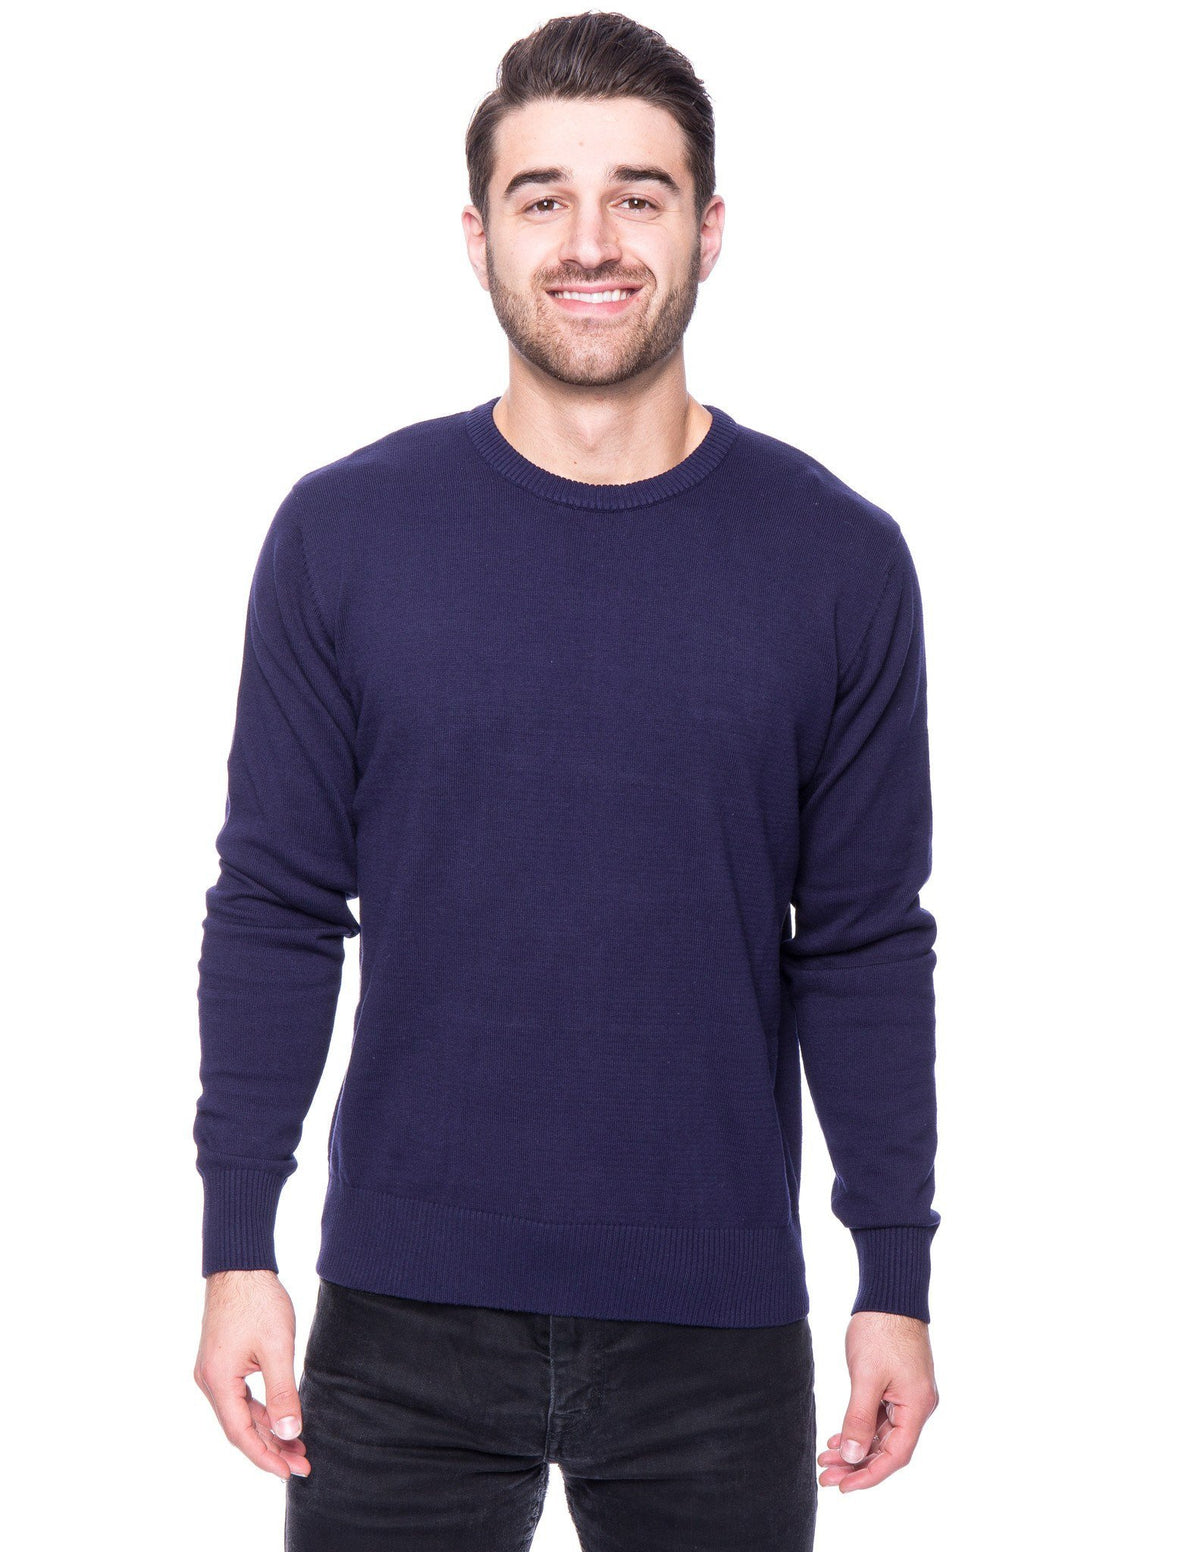 Men's Premium 100% Cotton Crew Neck Sweater - Marl Navy/Teal